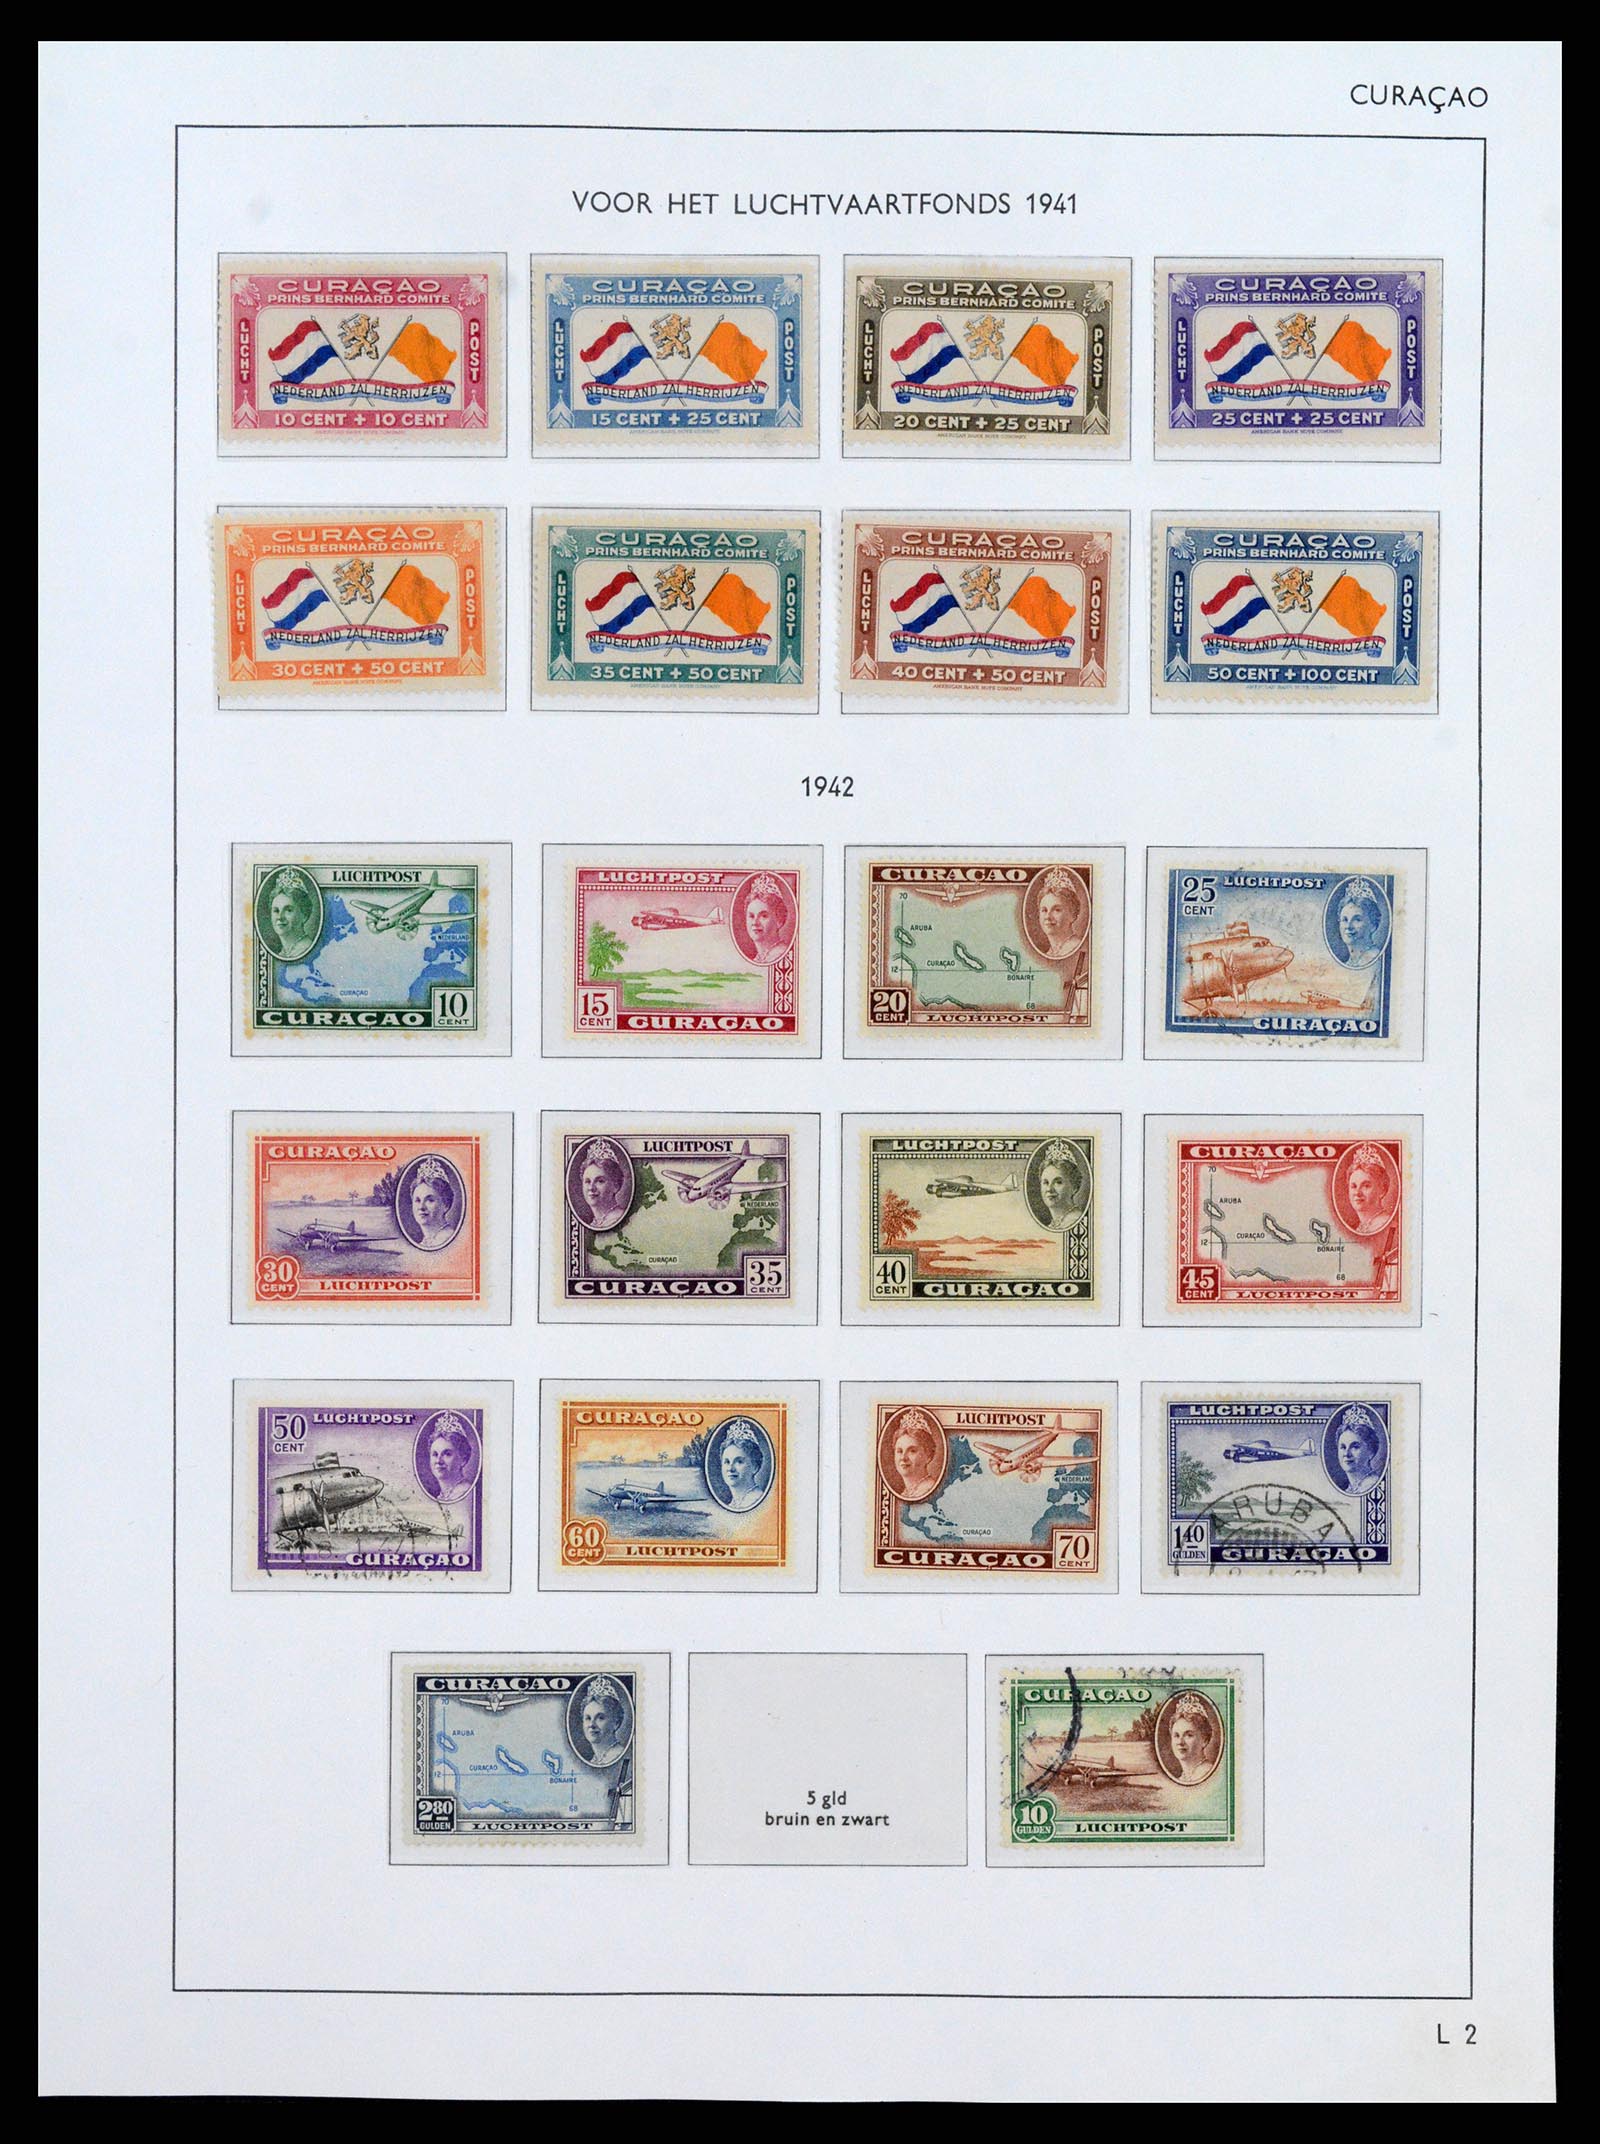 38069 0013 - Stamp collection 38069 Curaçao/Antilles 1873-1988.